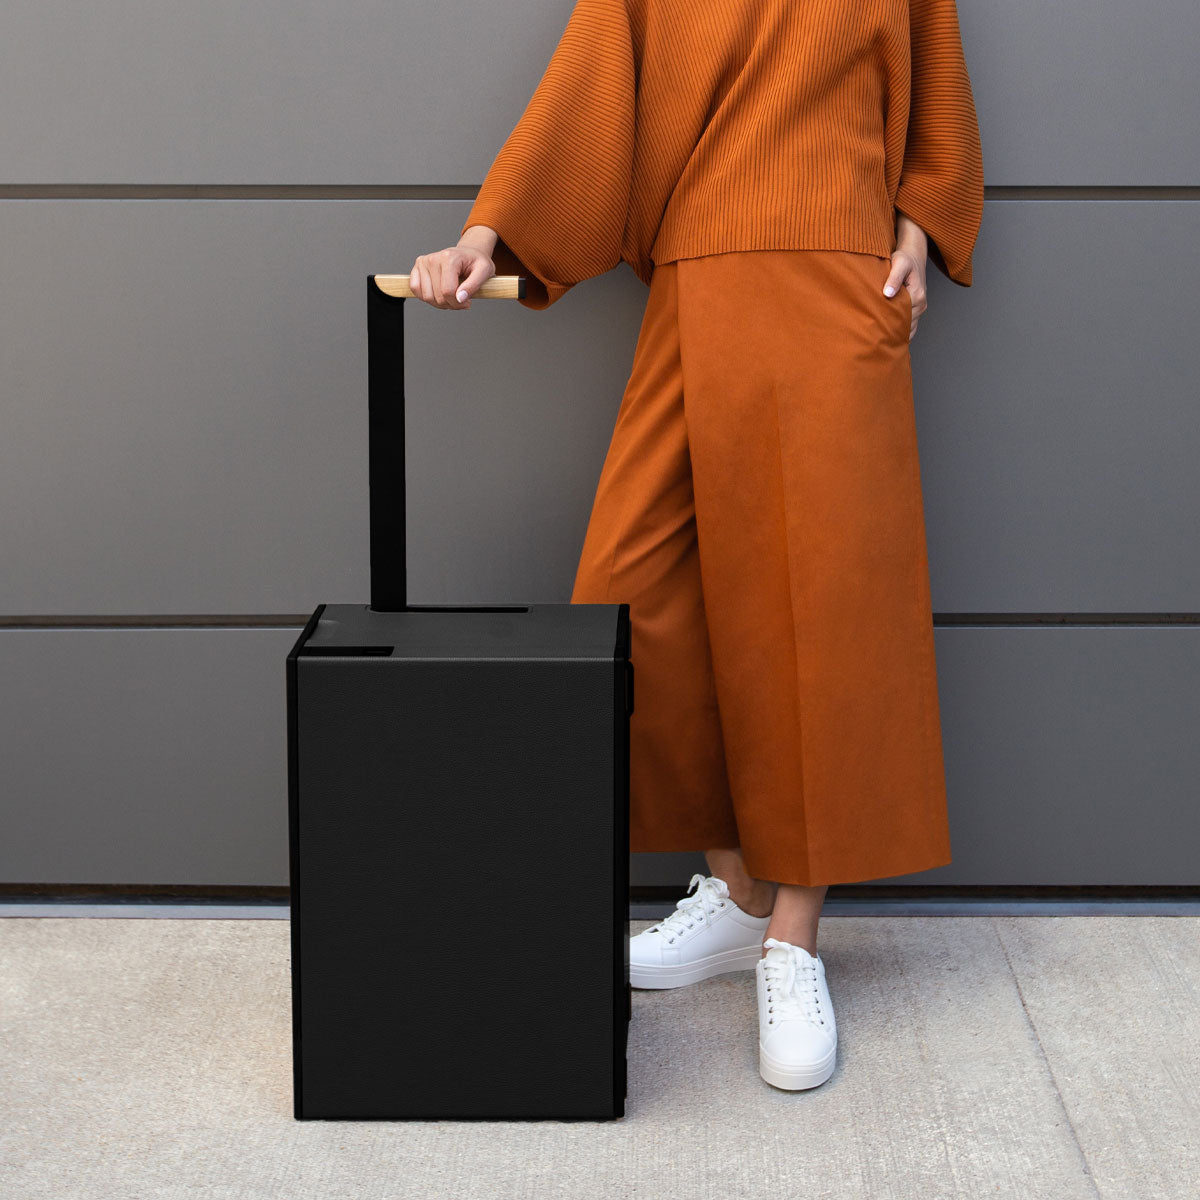 Charles-Simon_Travel_features_Bonaventure_design, luxury rolling luggage, minimalistic leather luggage